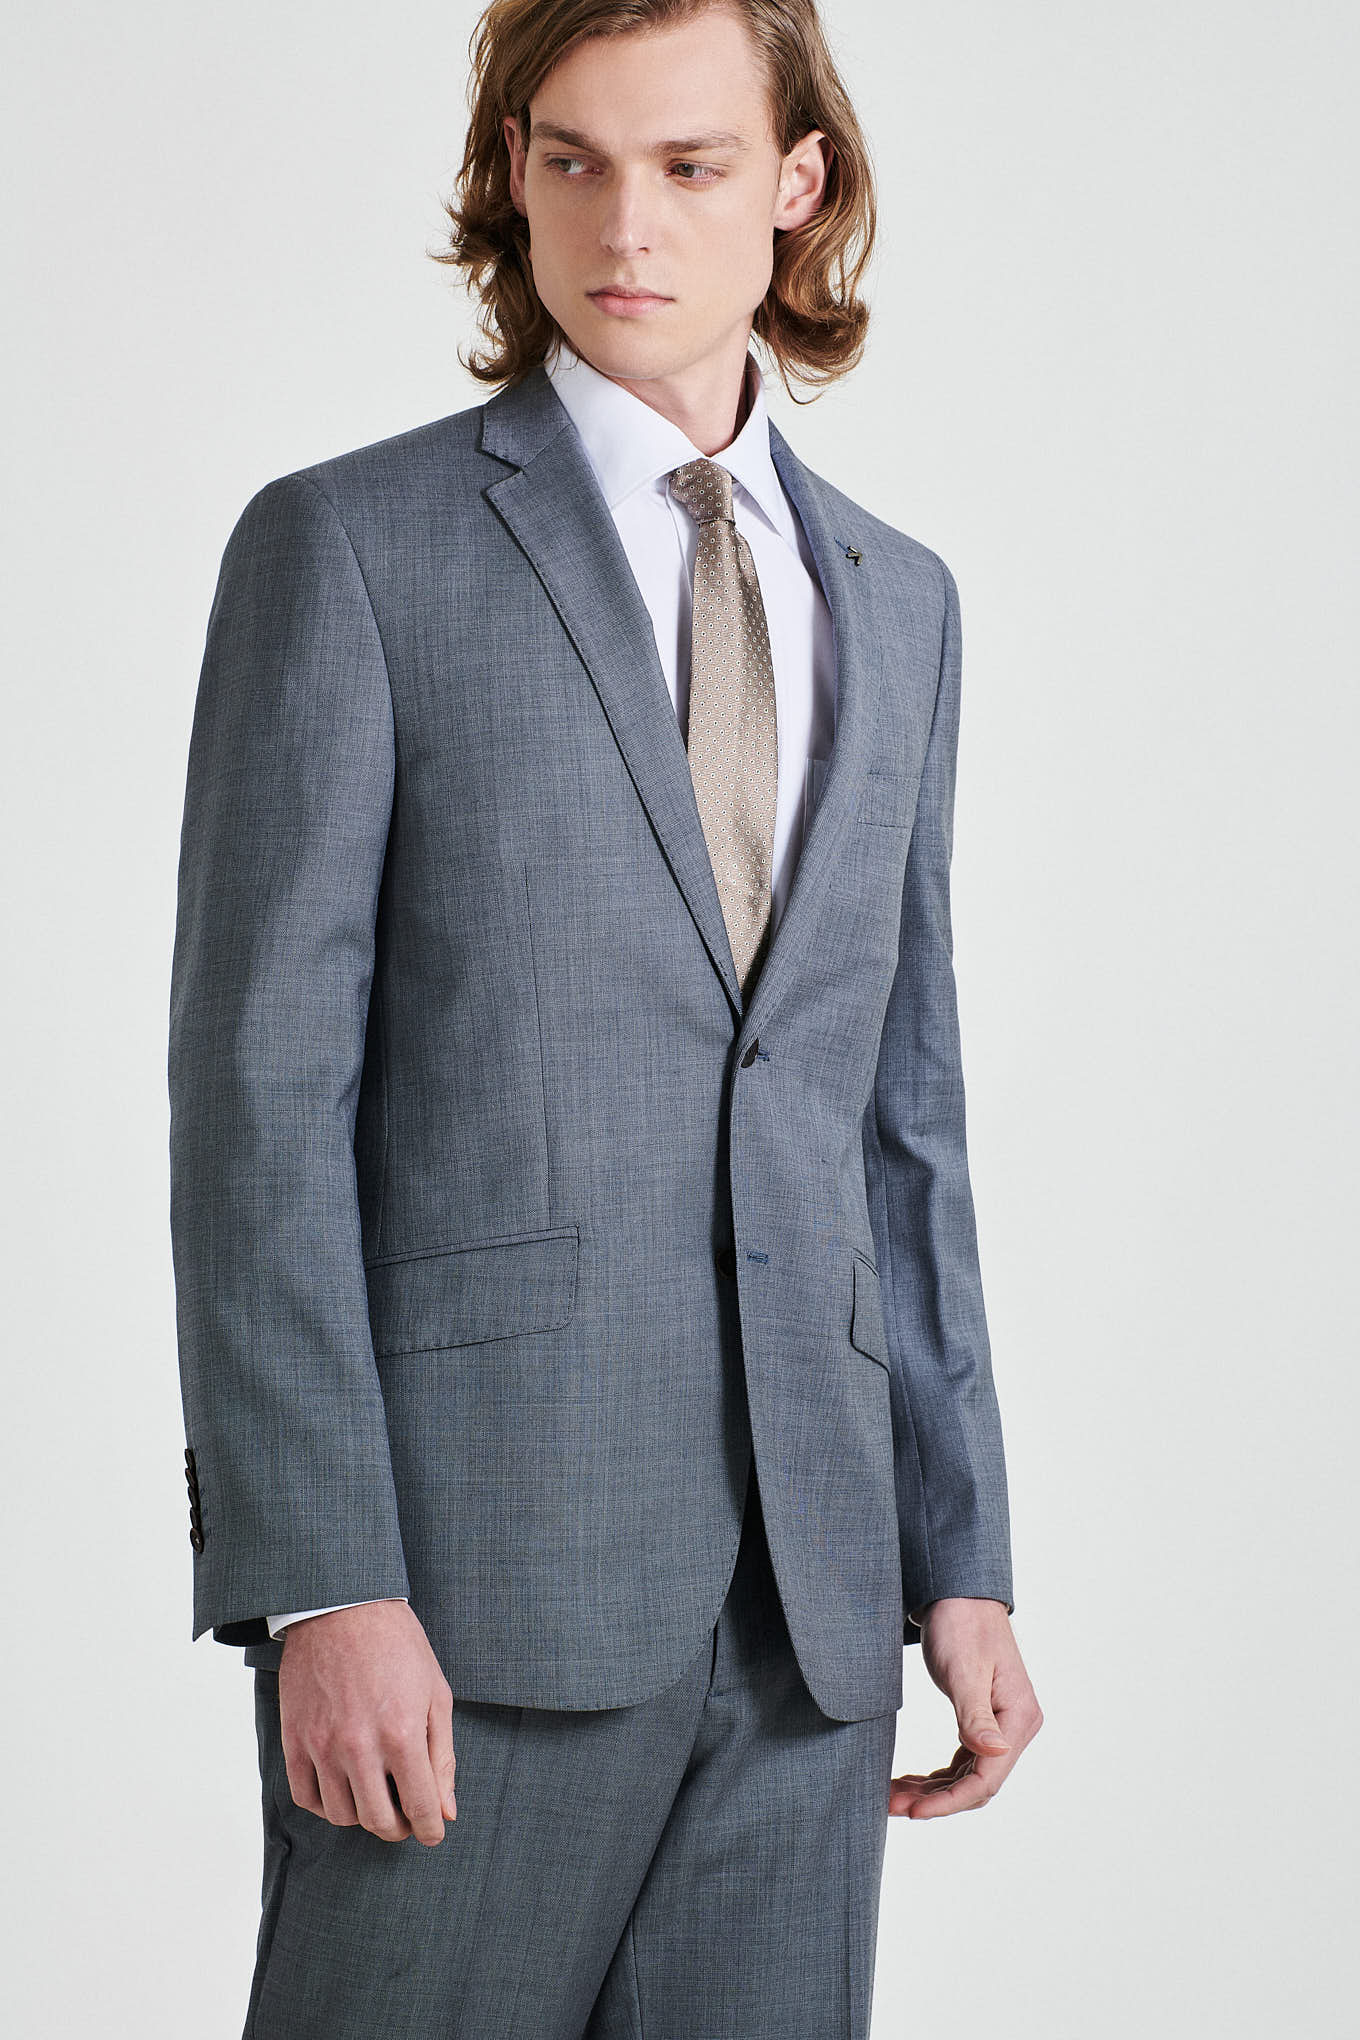 Suit Grey Formal Man